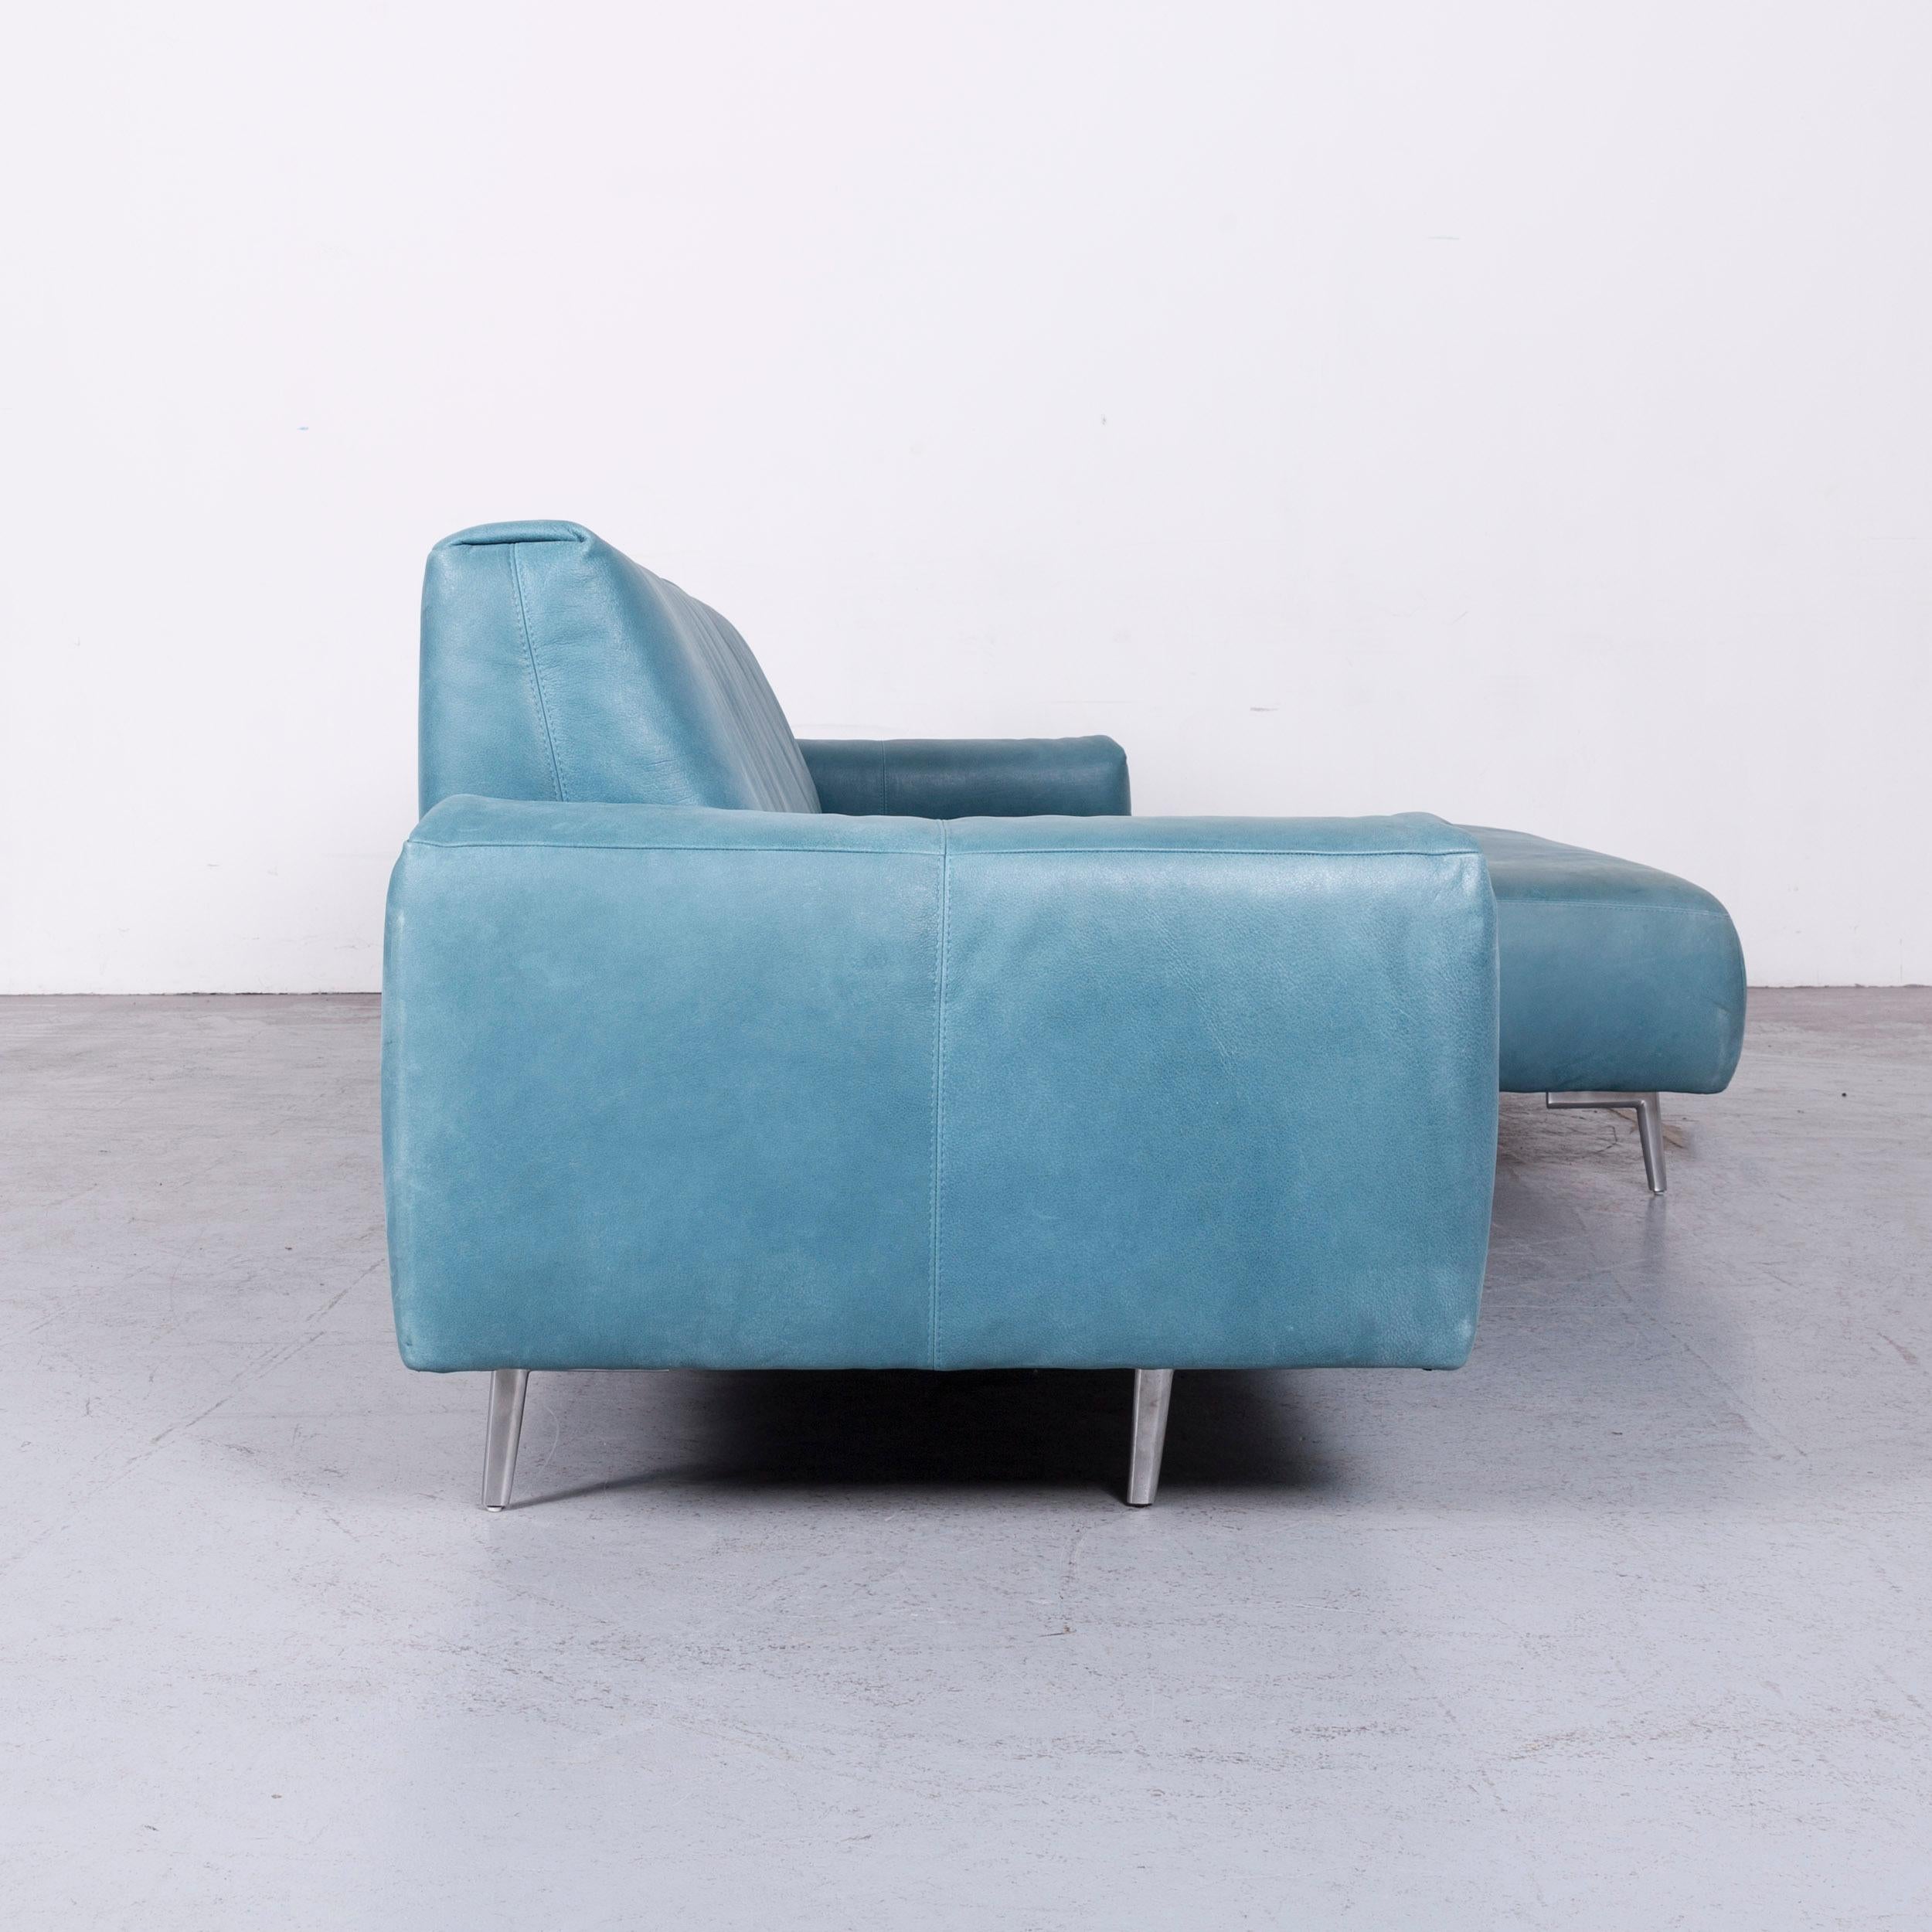 Koinor Garret Designer Leather Sofa in Bleu Corner, Sofa Couch For Sale 1